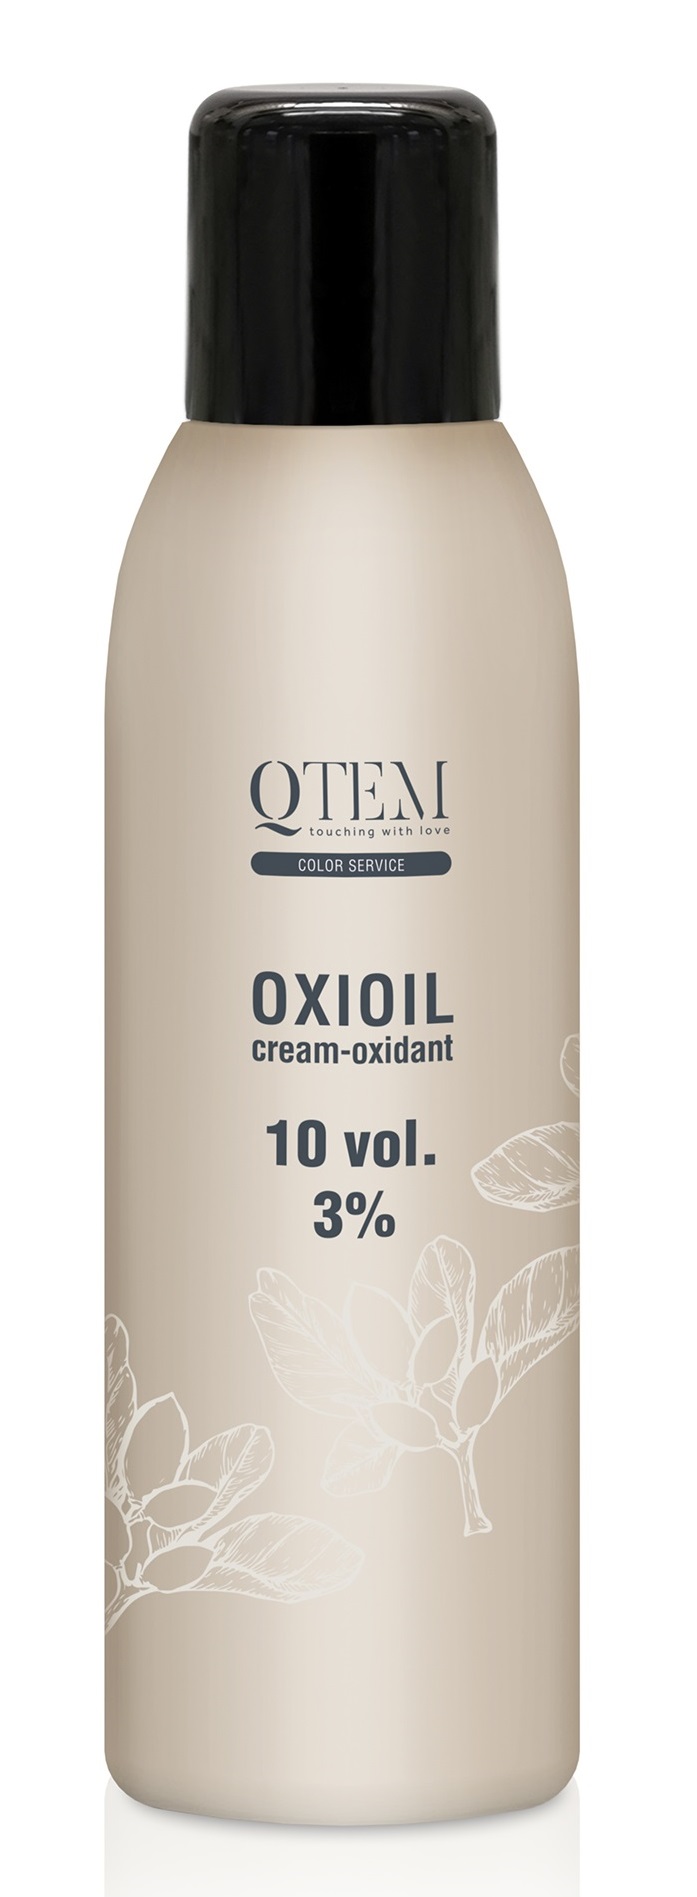 Крем-оксидант QTEM 3% (OXIOIL CREAM-OXIDANT 10 Vol) 1000 мл